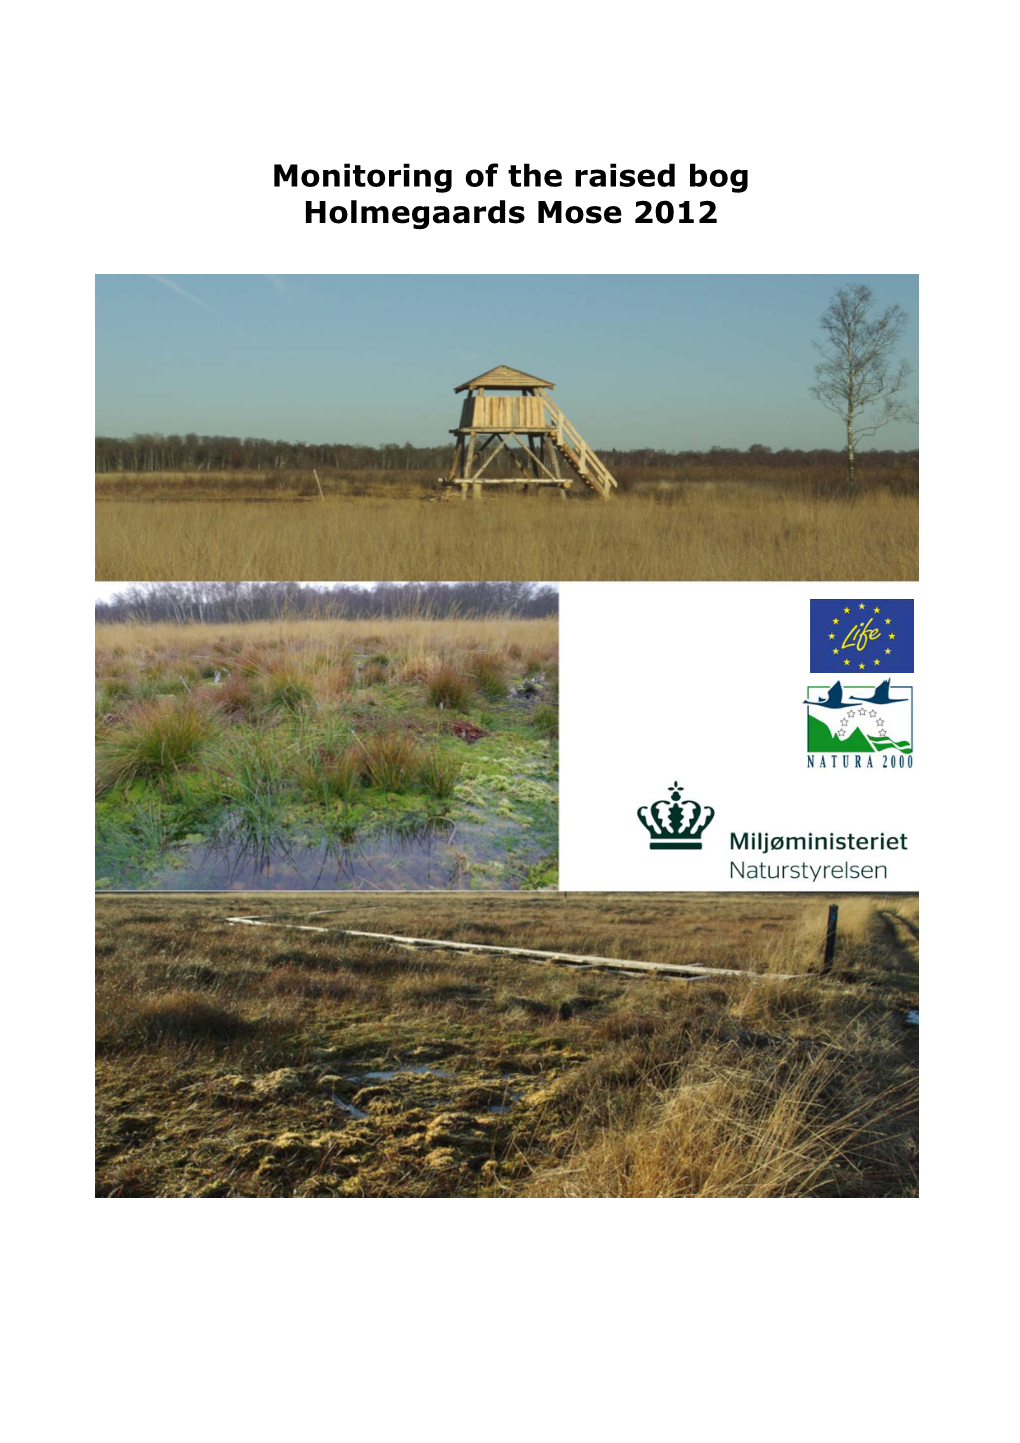 Monitoring of the Raised Bog Holmegaards Mose 2012